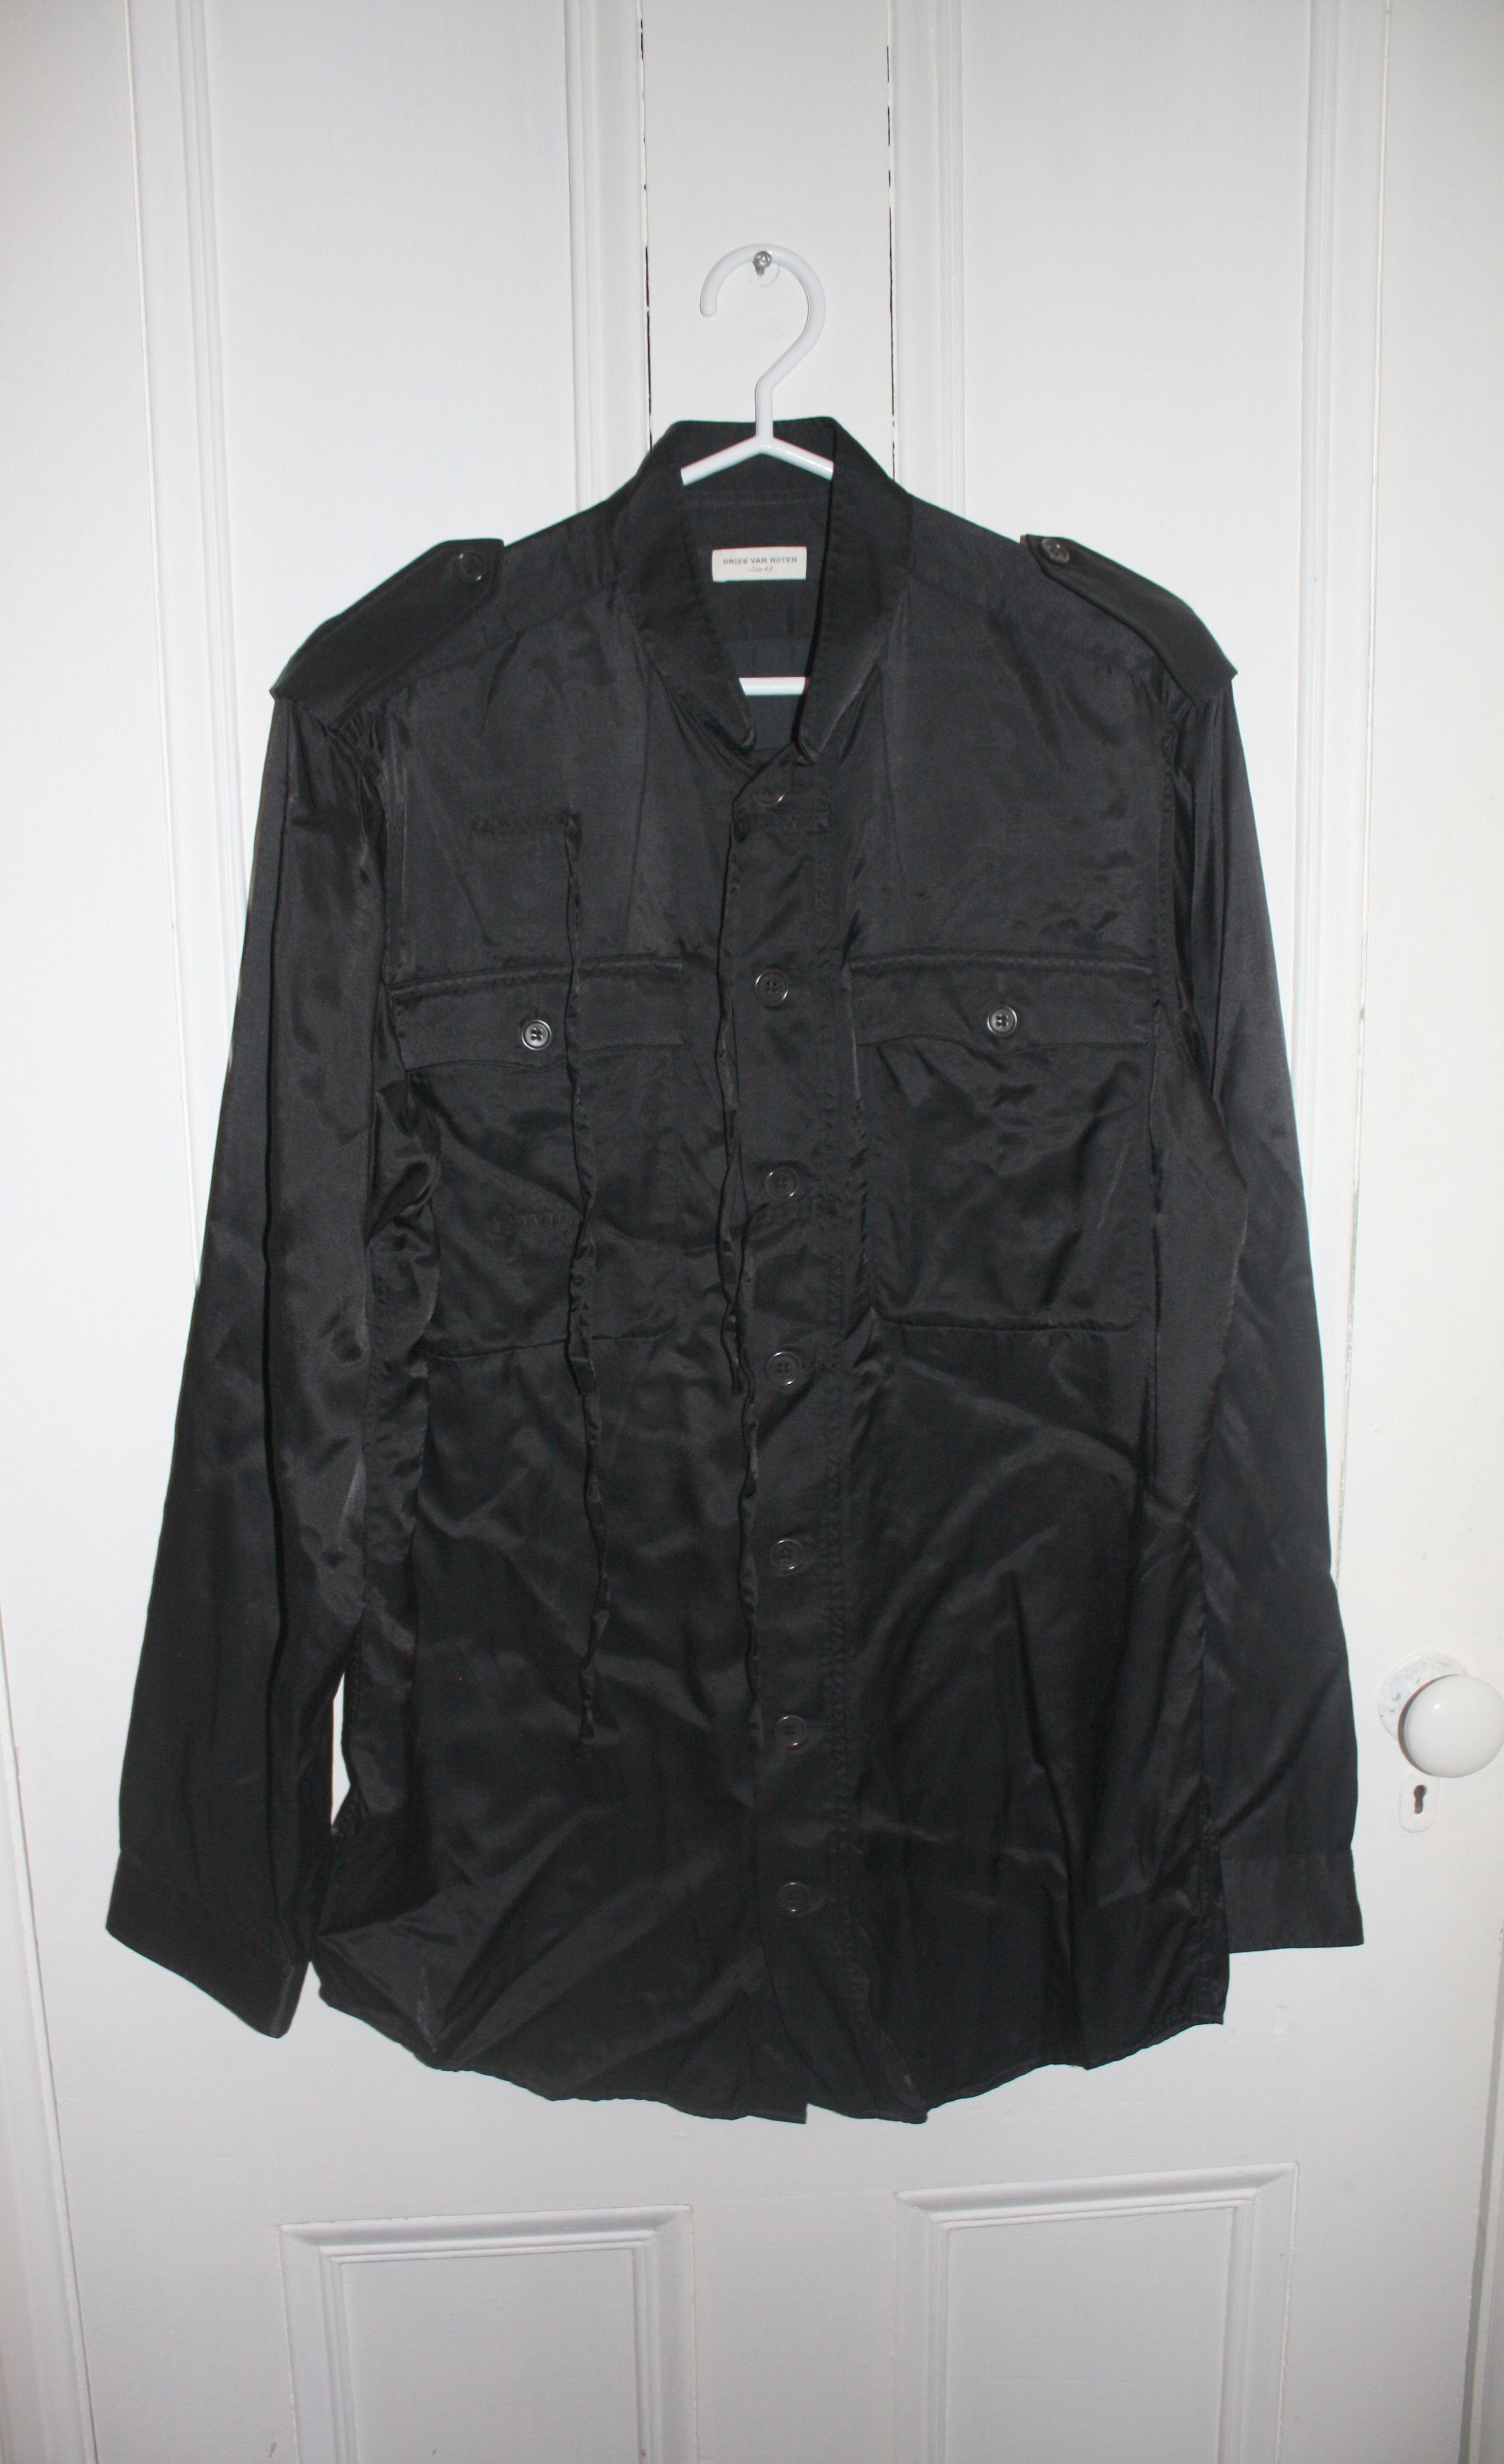 Dries Van Noten Black fW15 cupro military shirt | Grailed